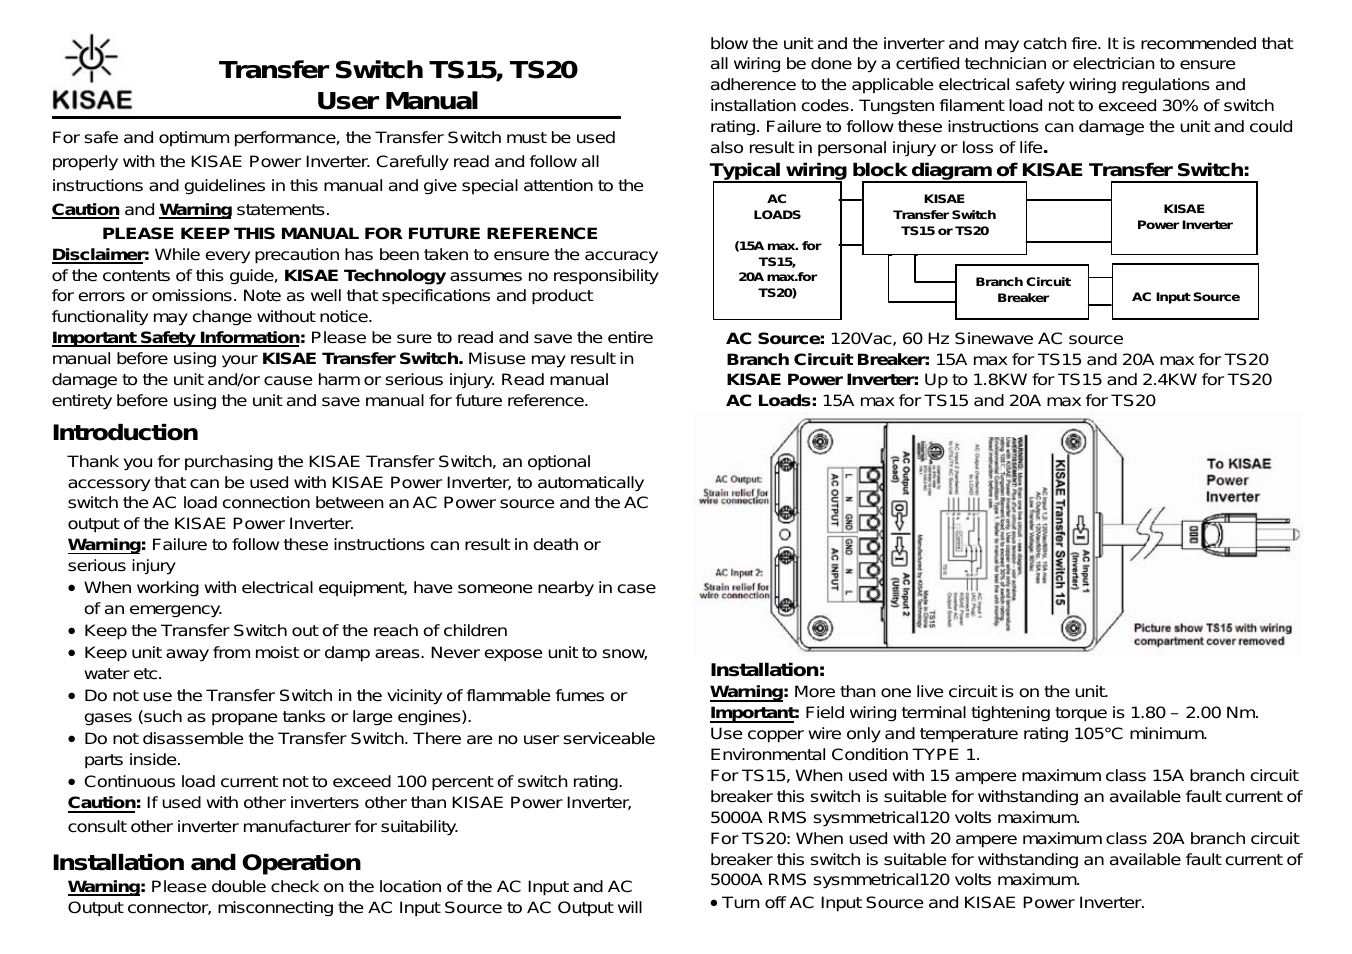 TS15 Transfer Switch